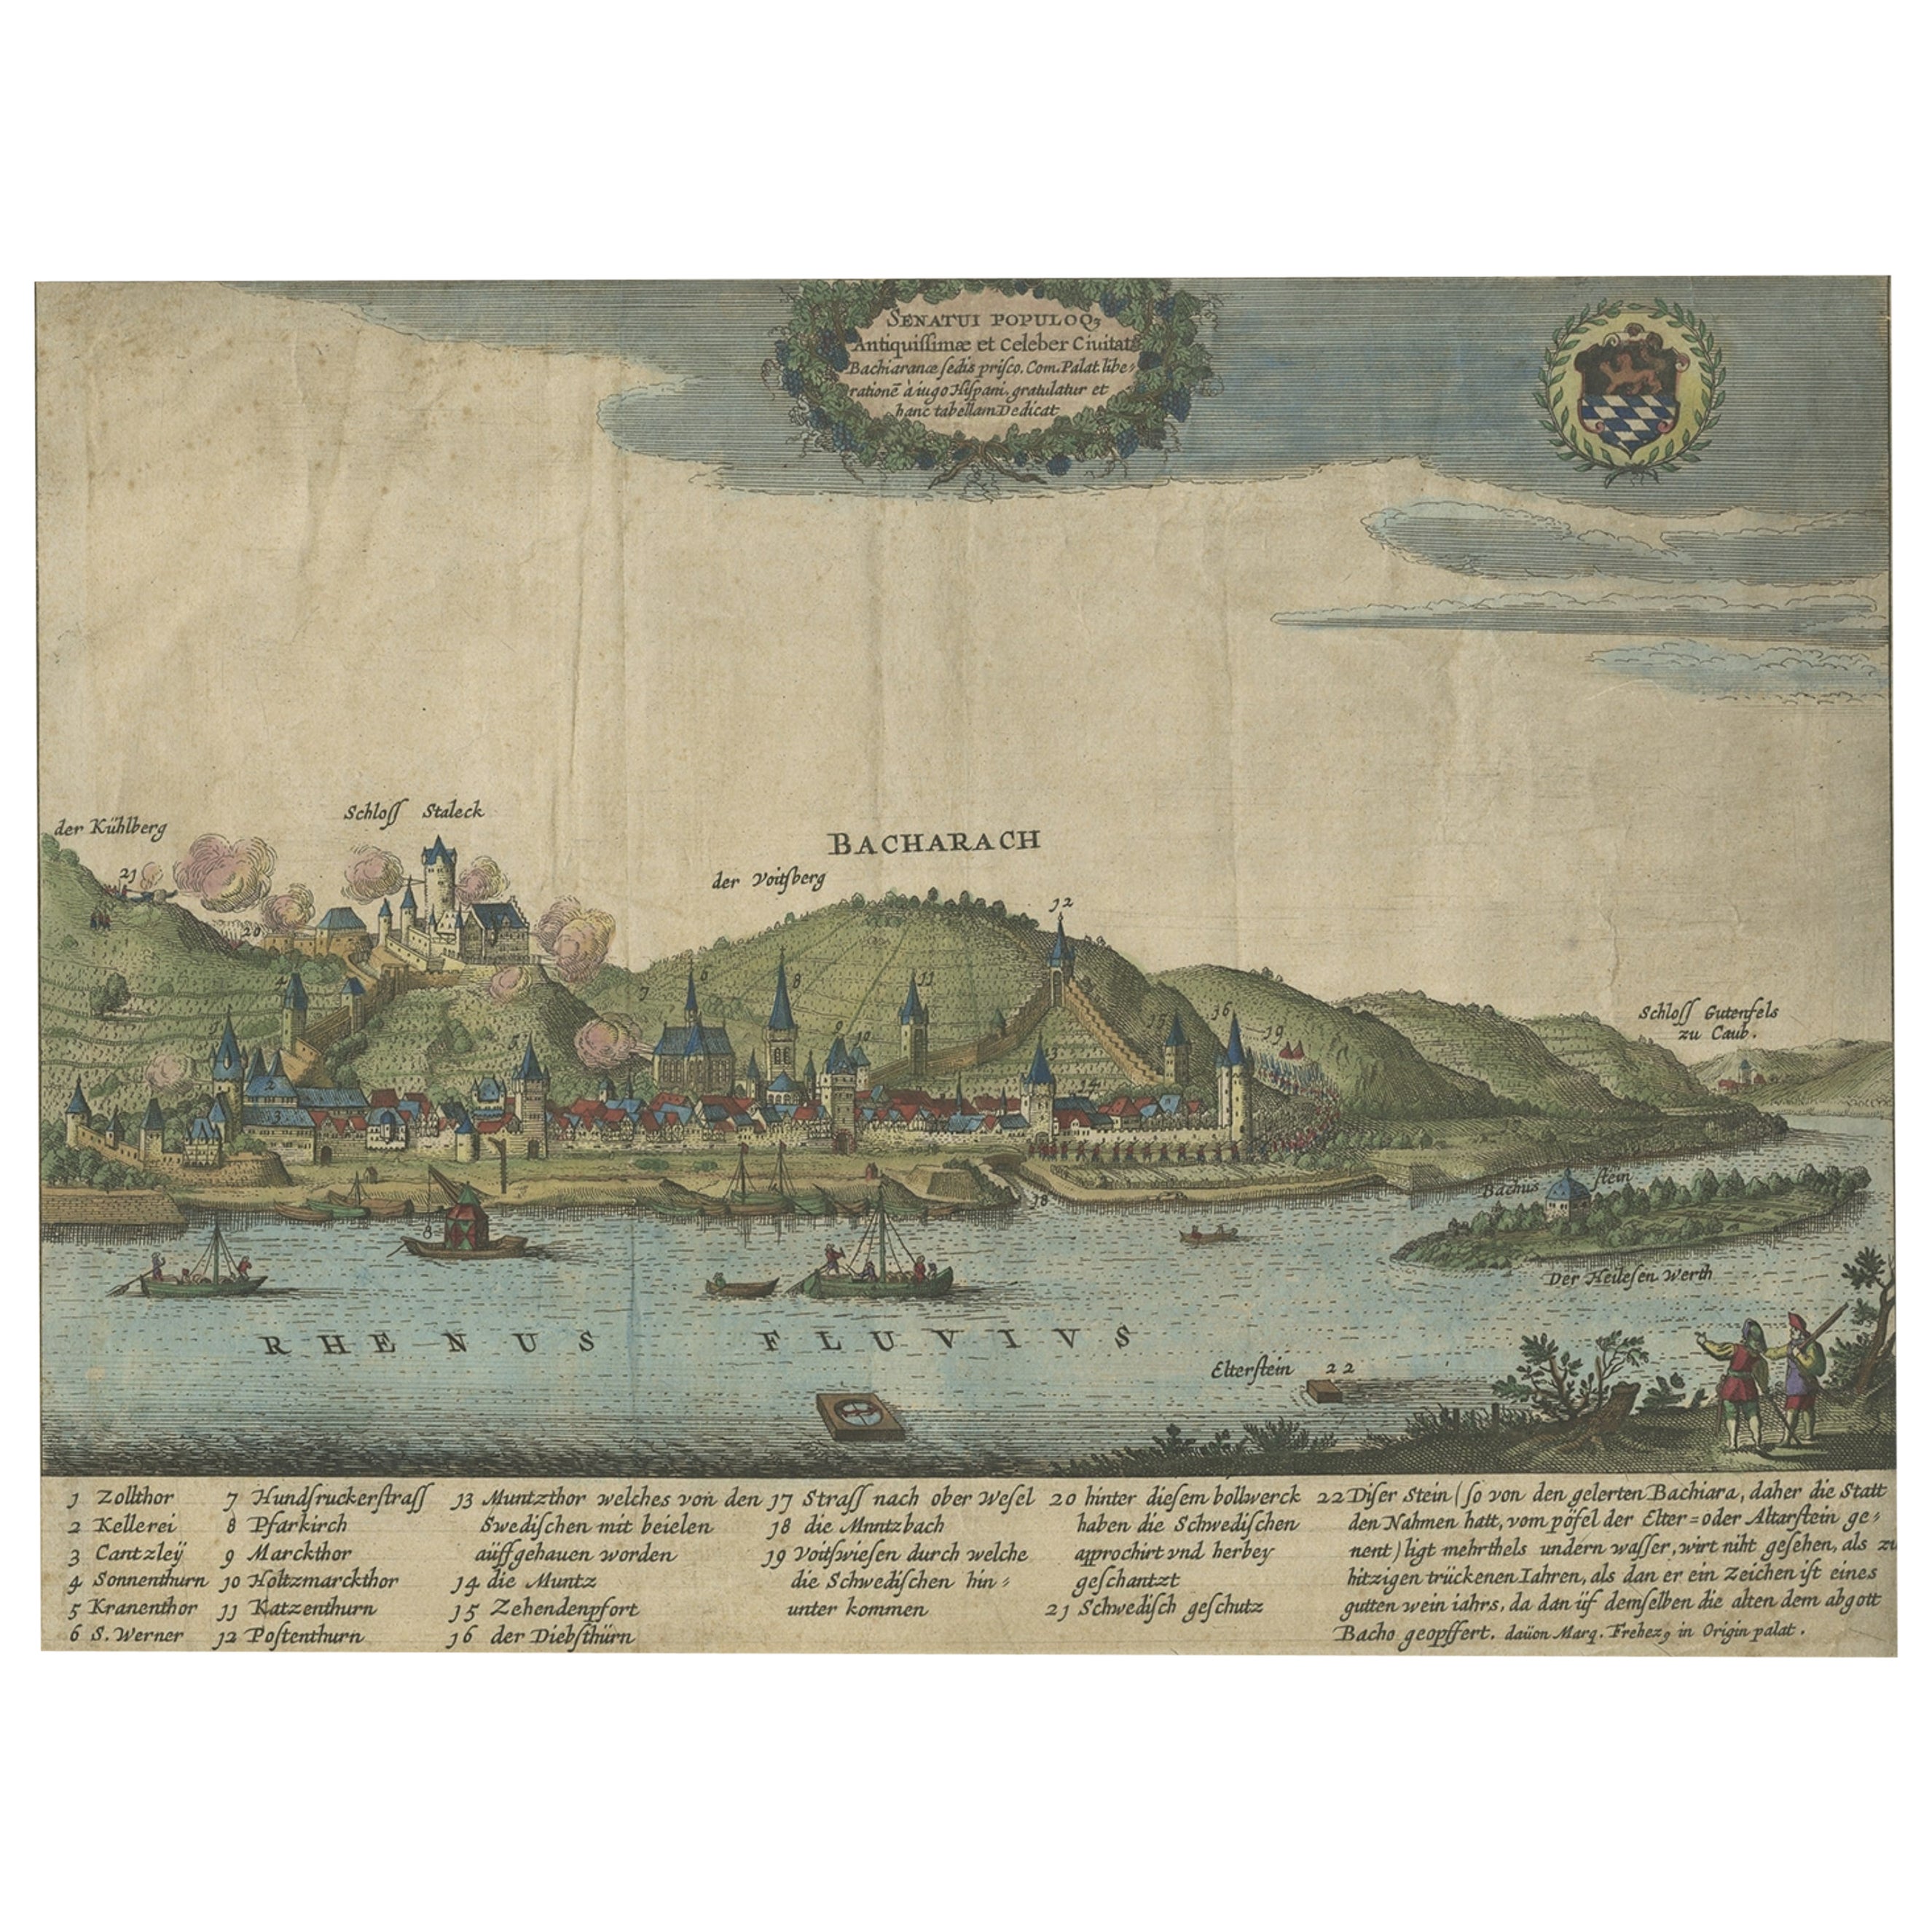 View of Bacharach, Mainz-Bingen District in Rhineland-Palatinate, Germany, 1650